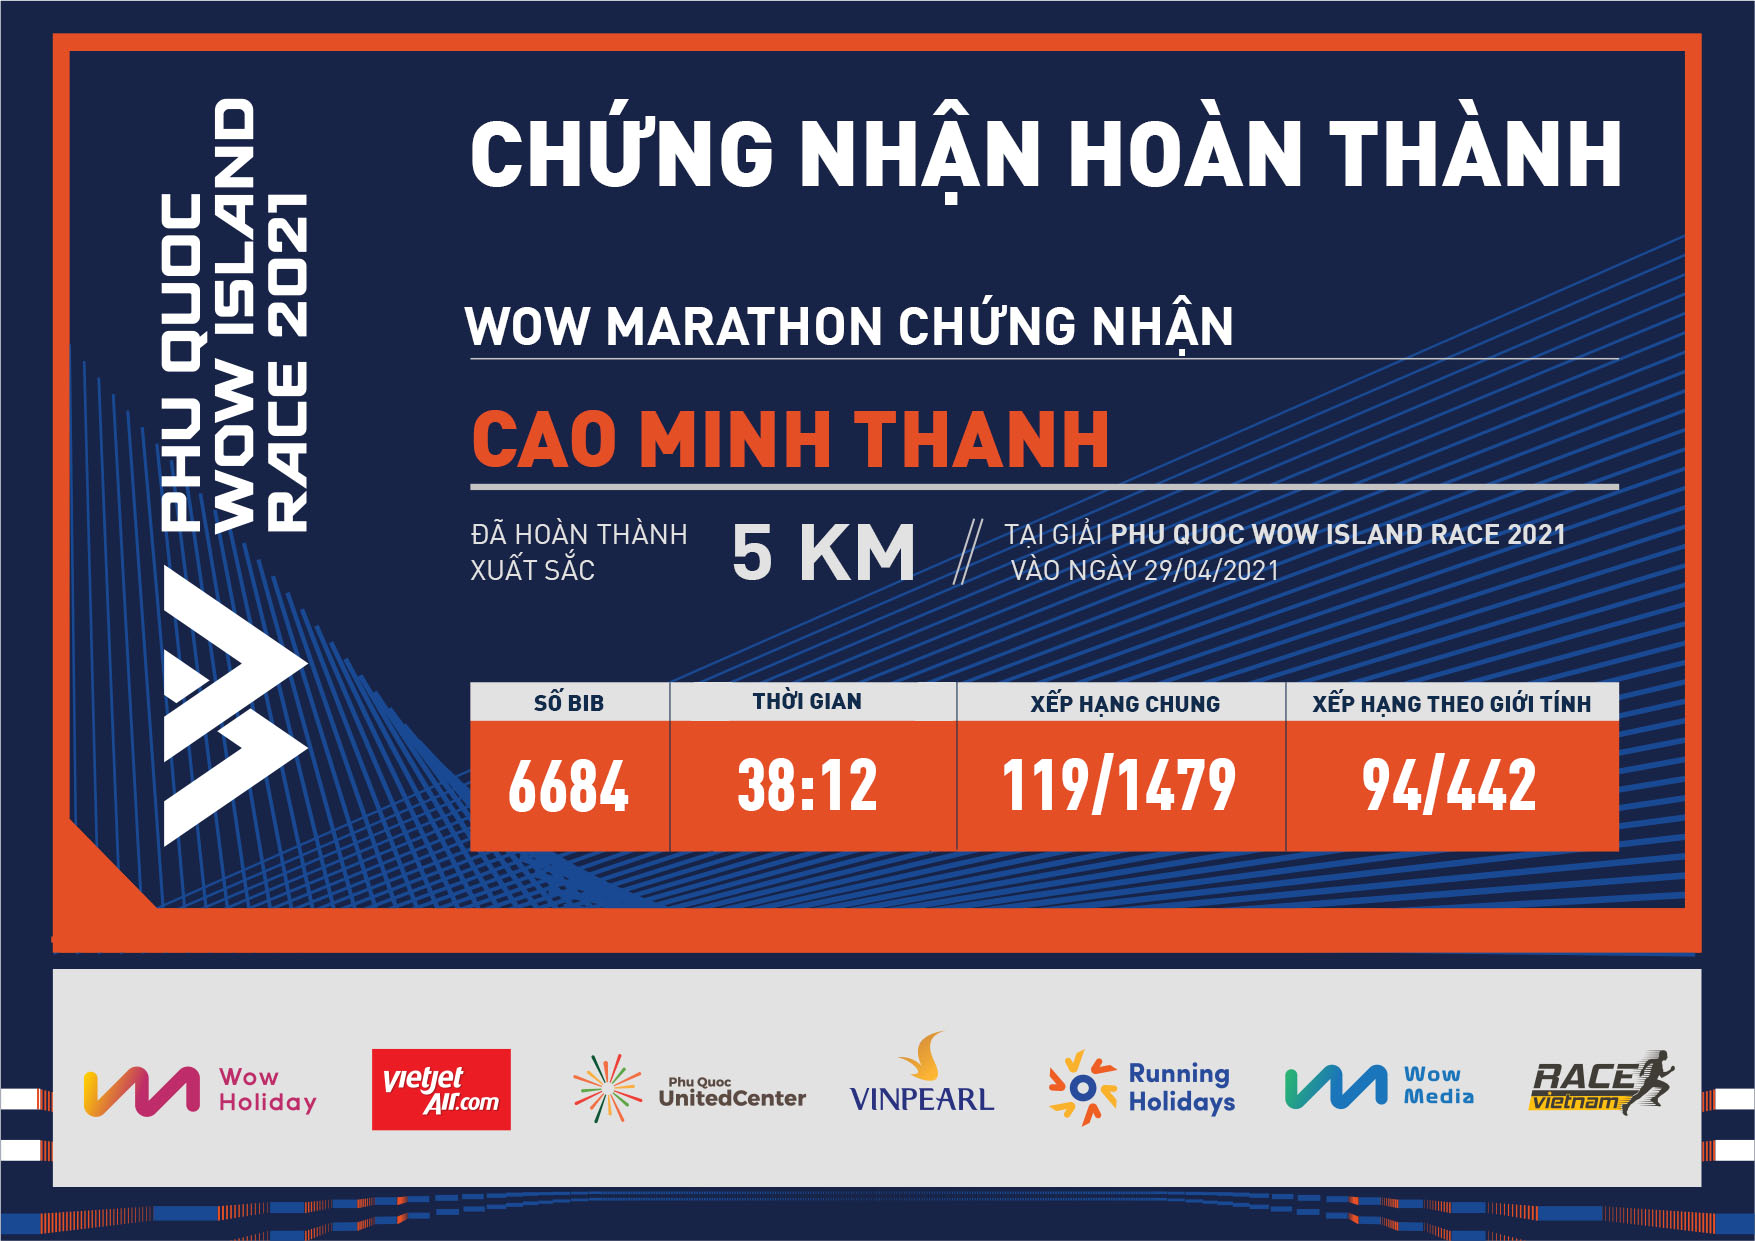 6684 - Cao Minh Thanh